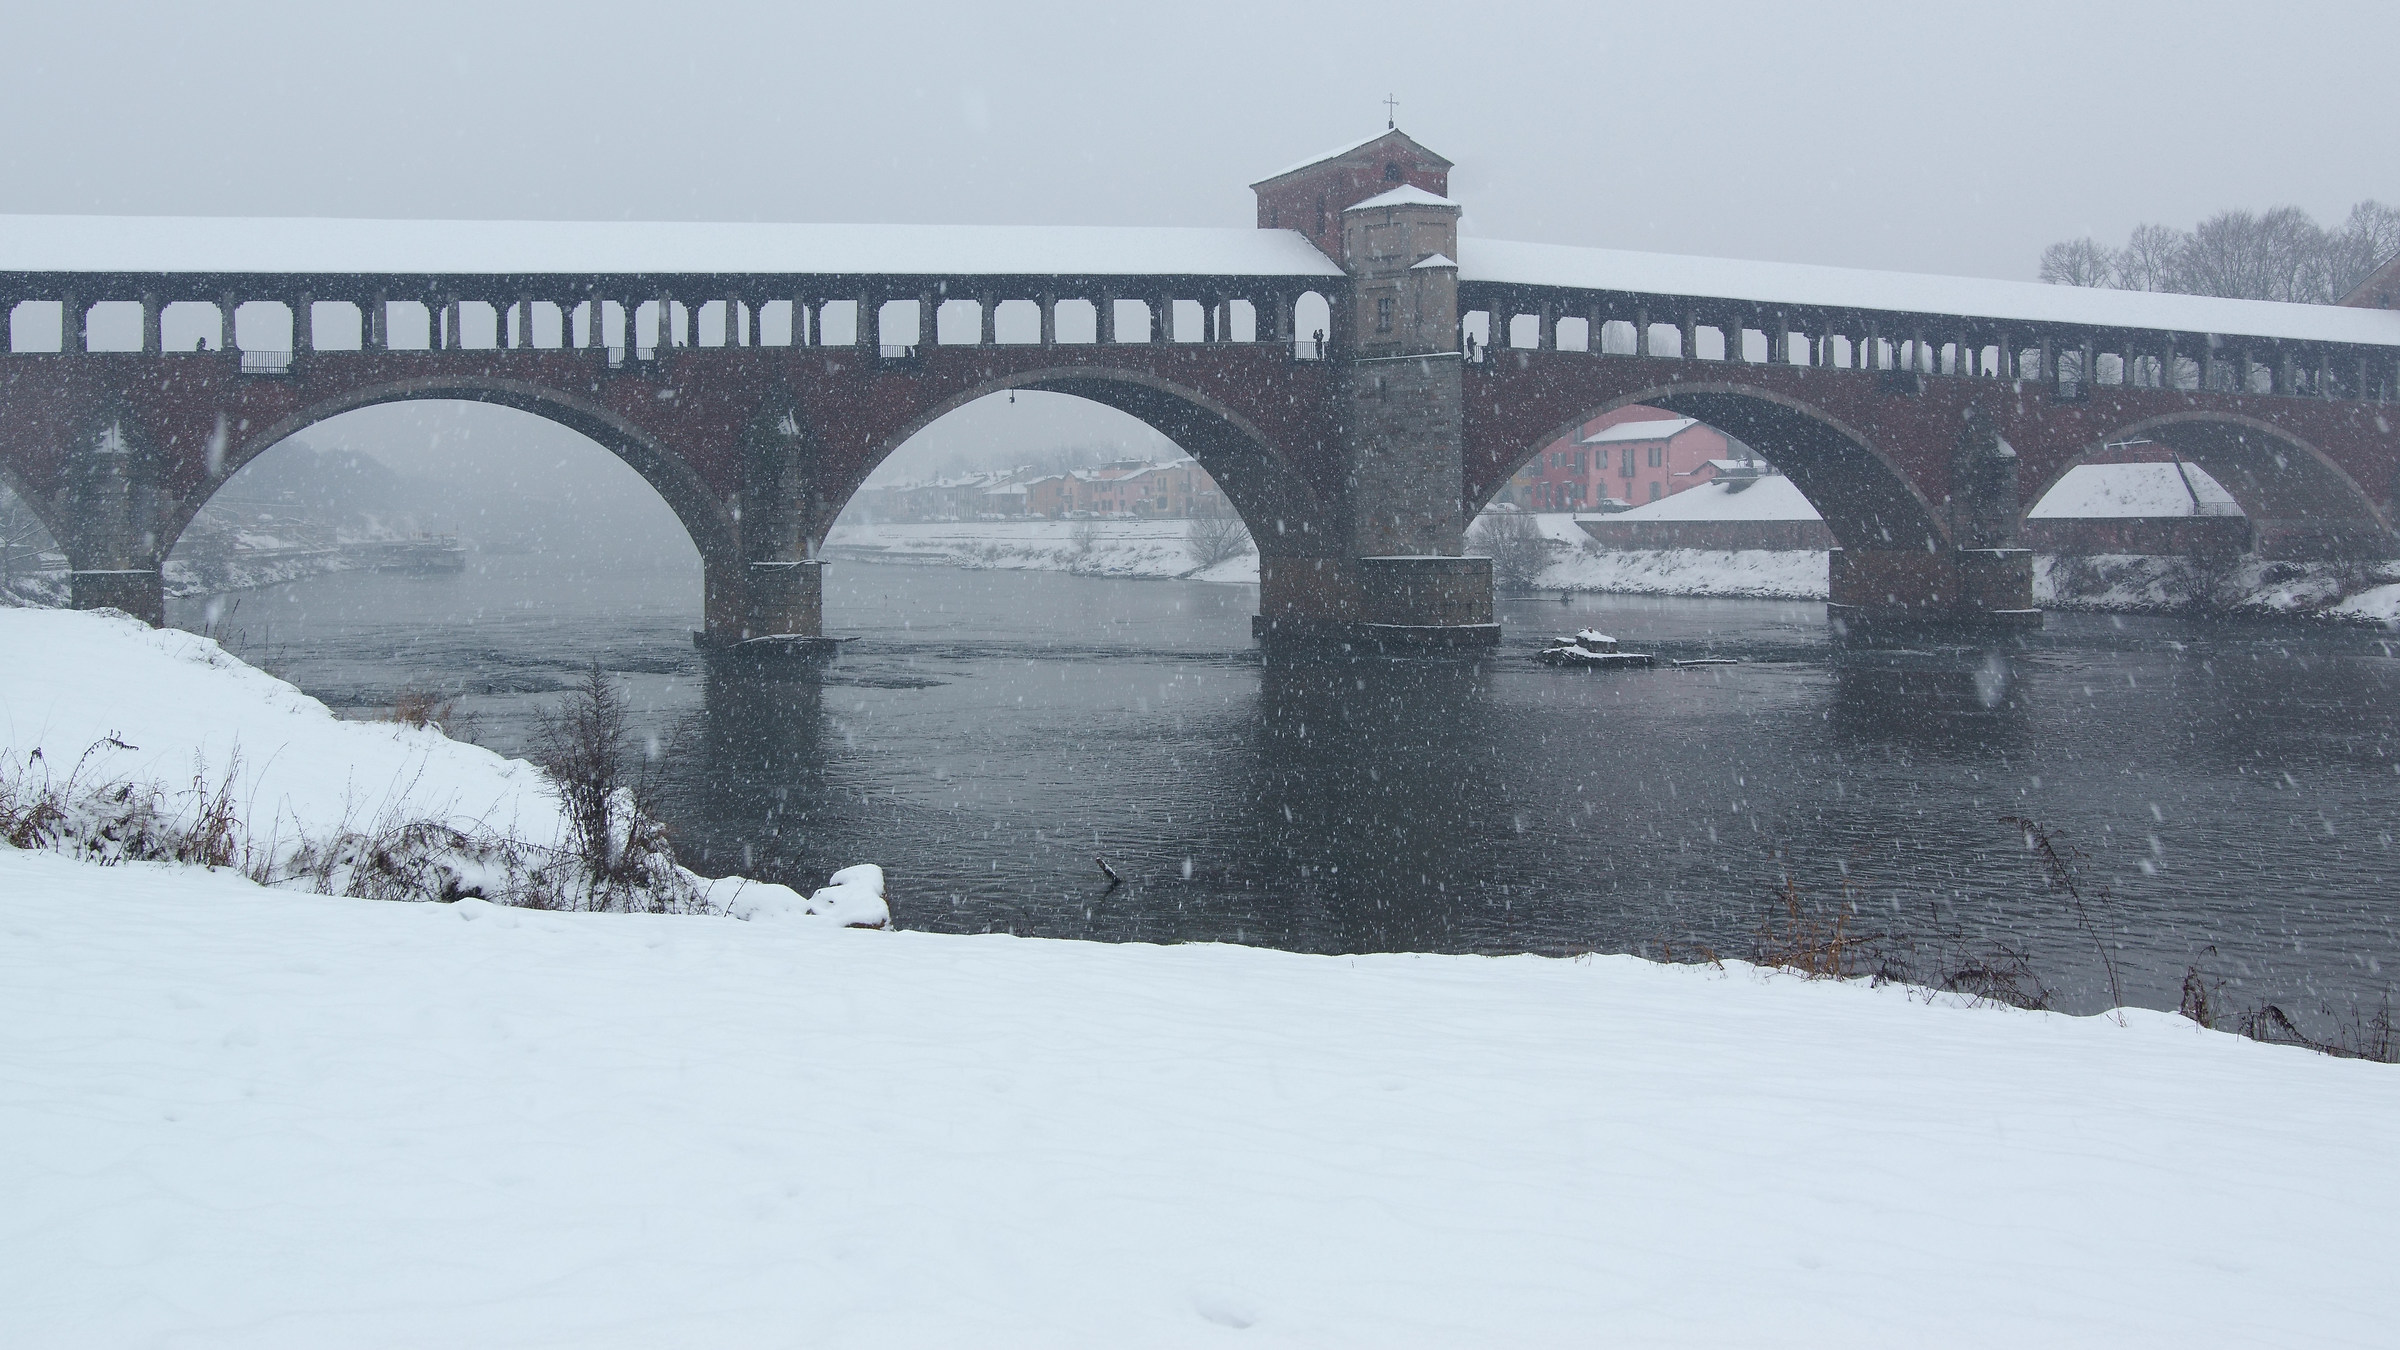 The bridge and the snow 2...